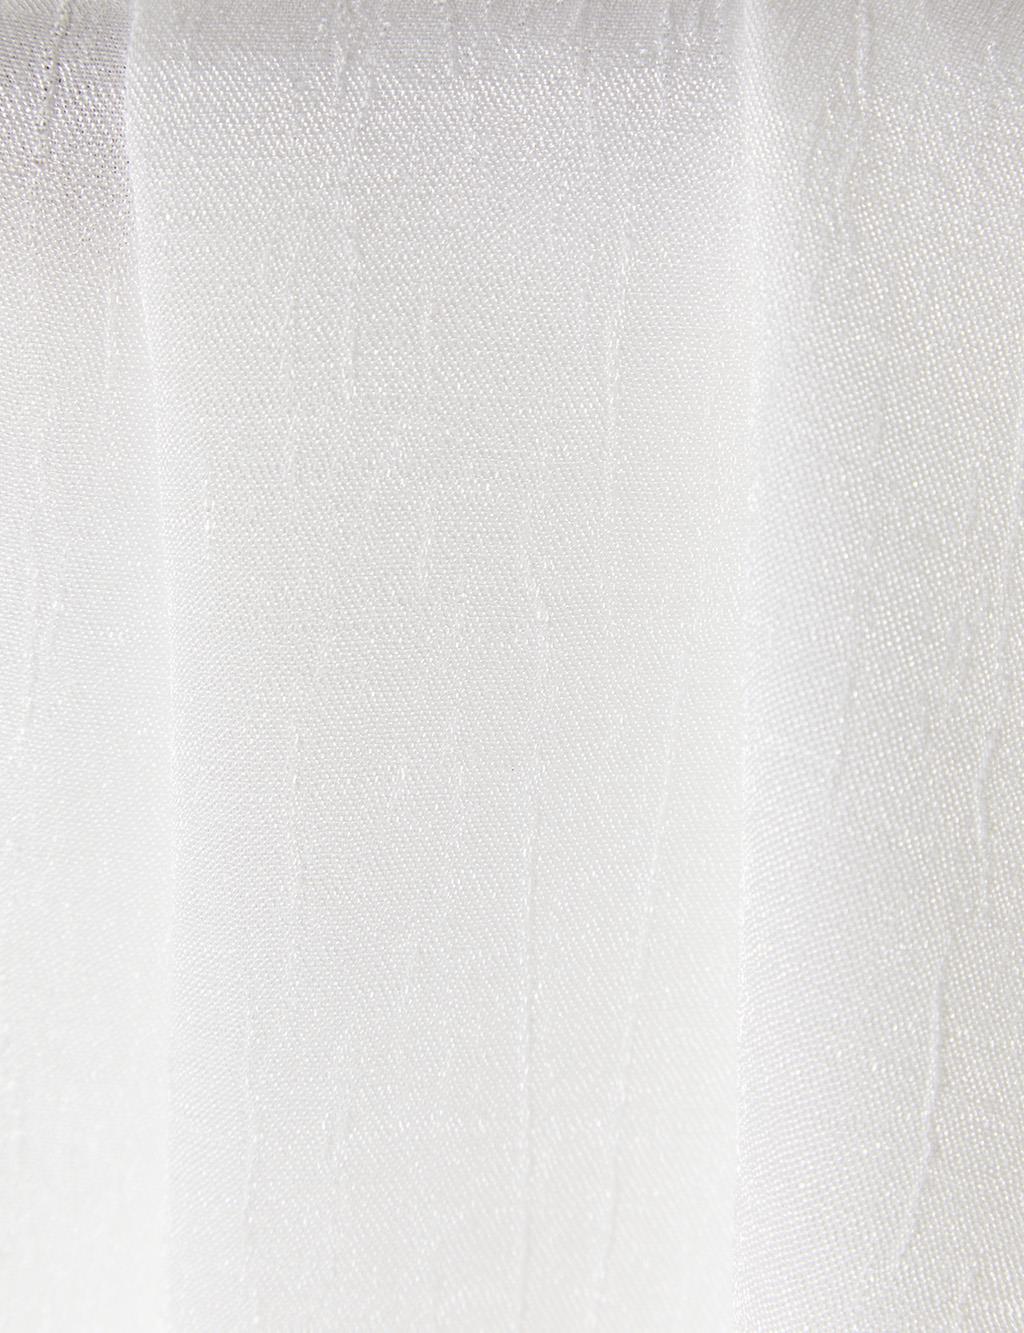 Solid Color Janjan Silk Shawl White